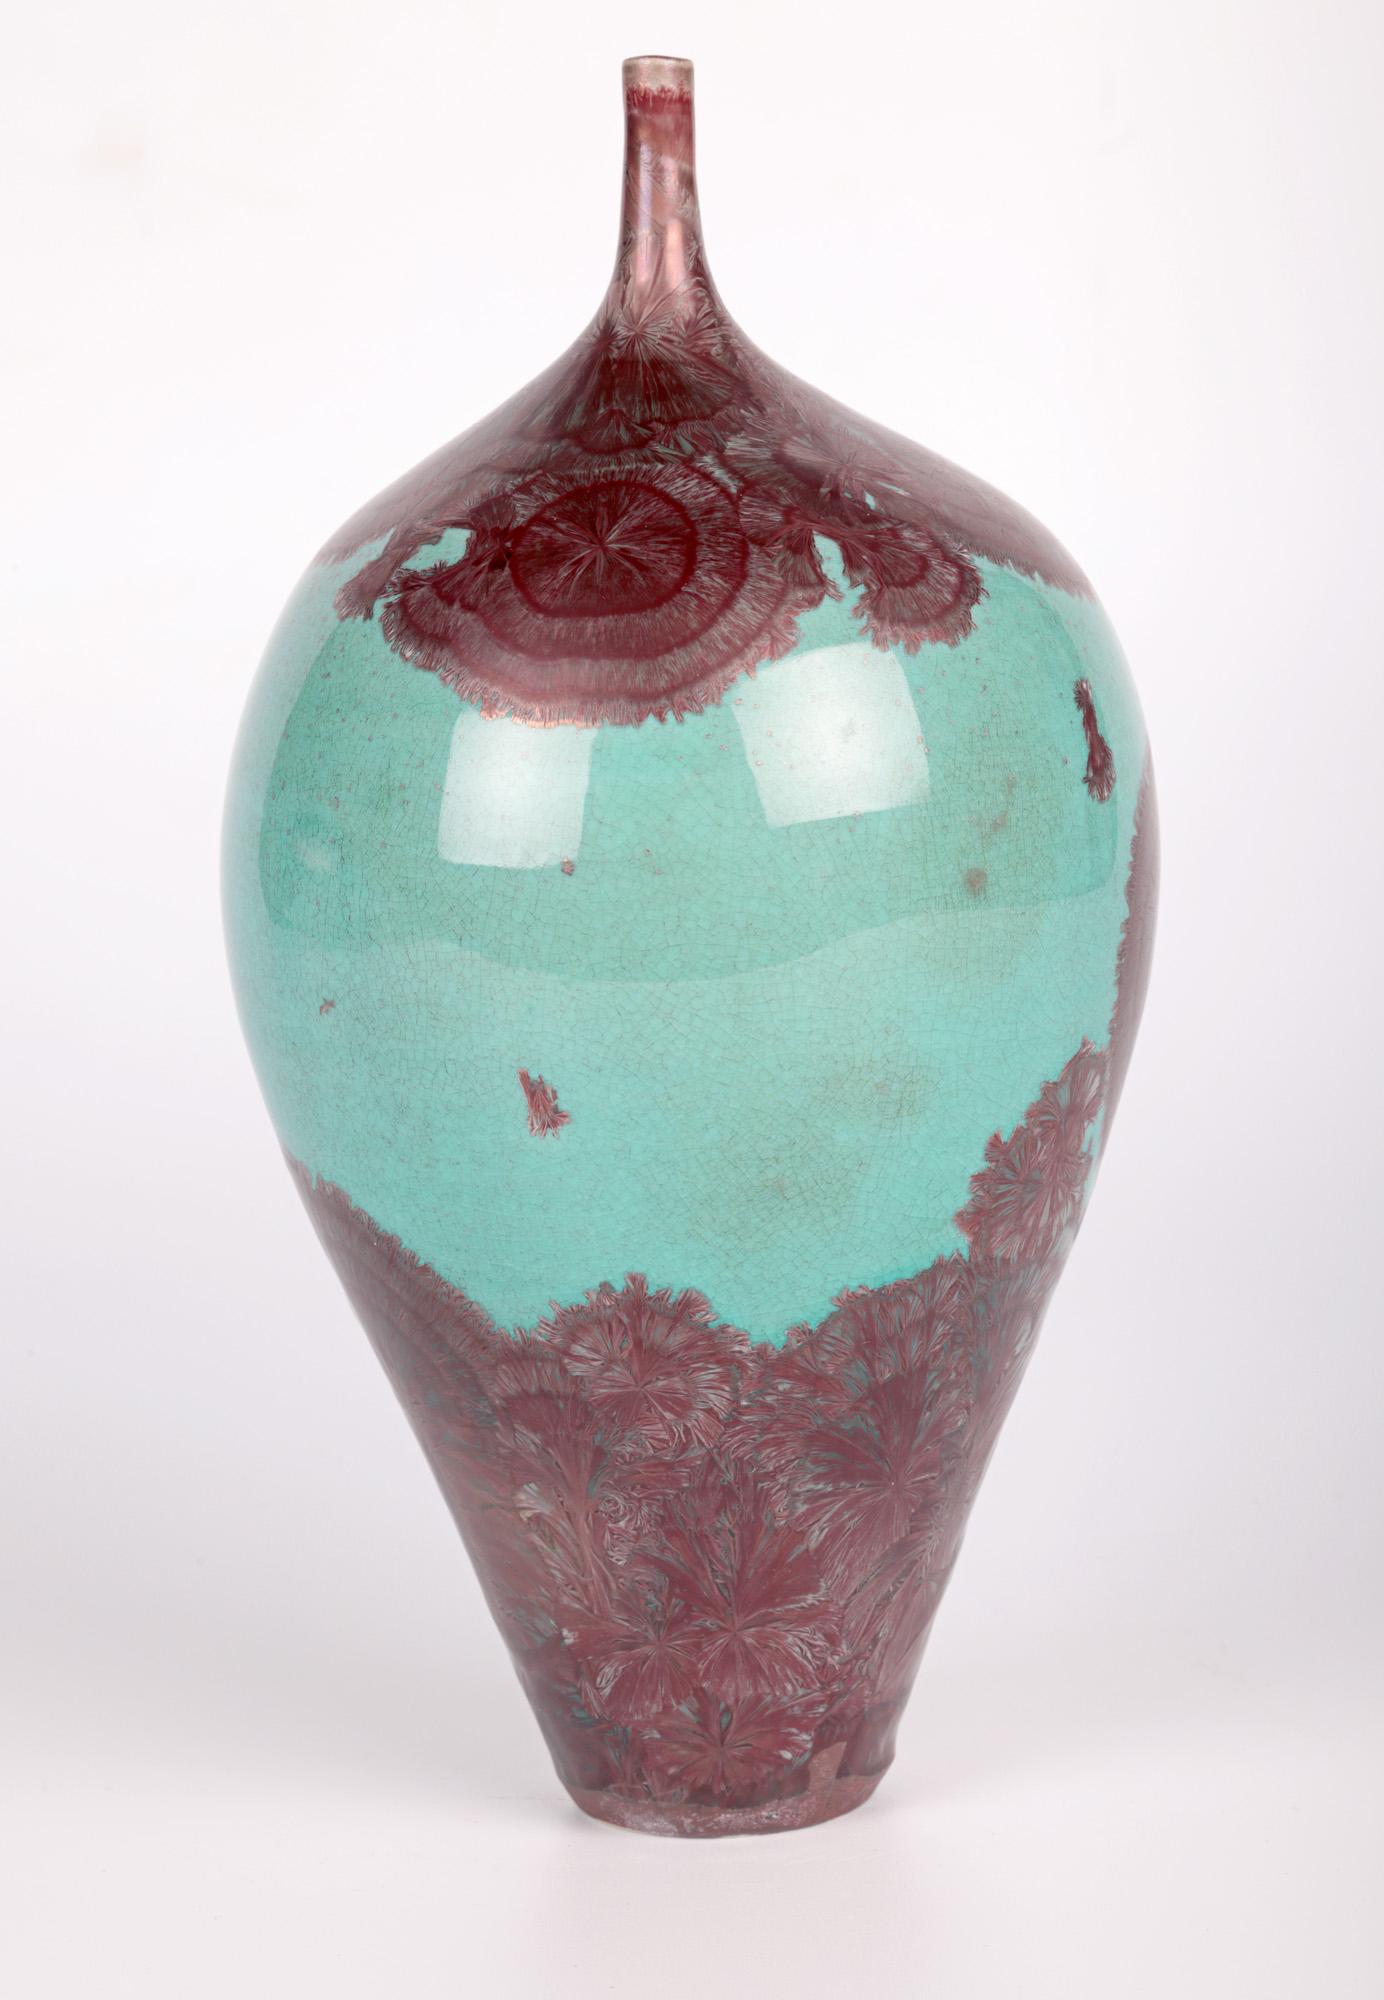 Peter Ilsley Crystalline Glazed Studio Pottery Porcelain Bottle Vase For Sale 10